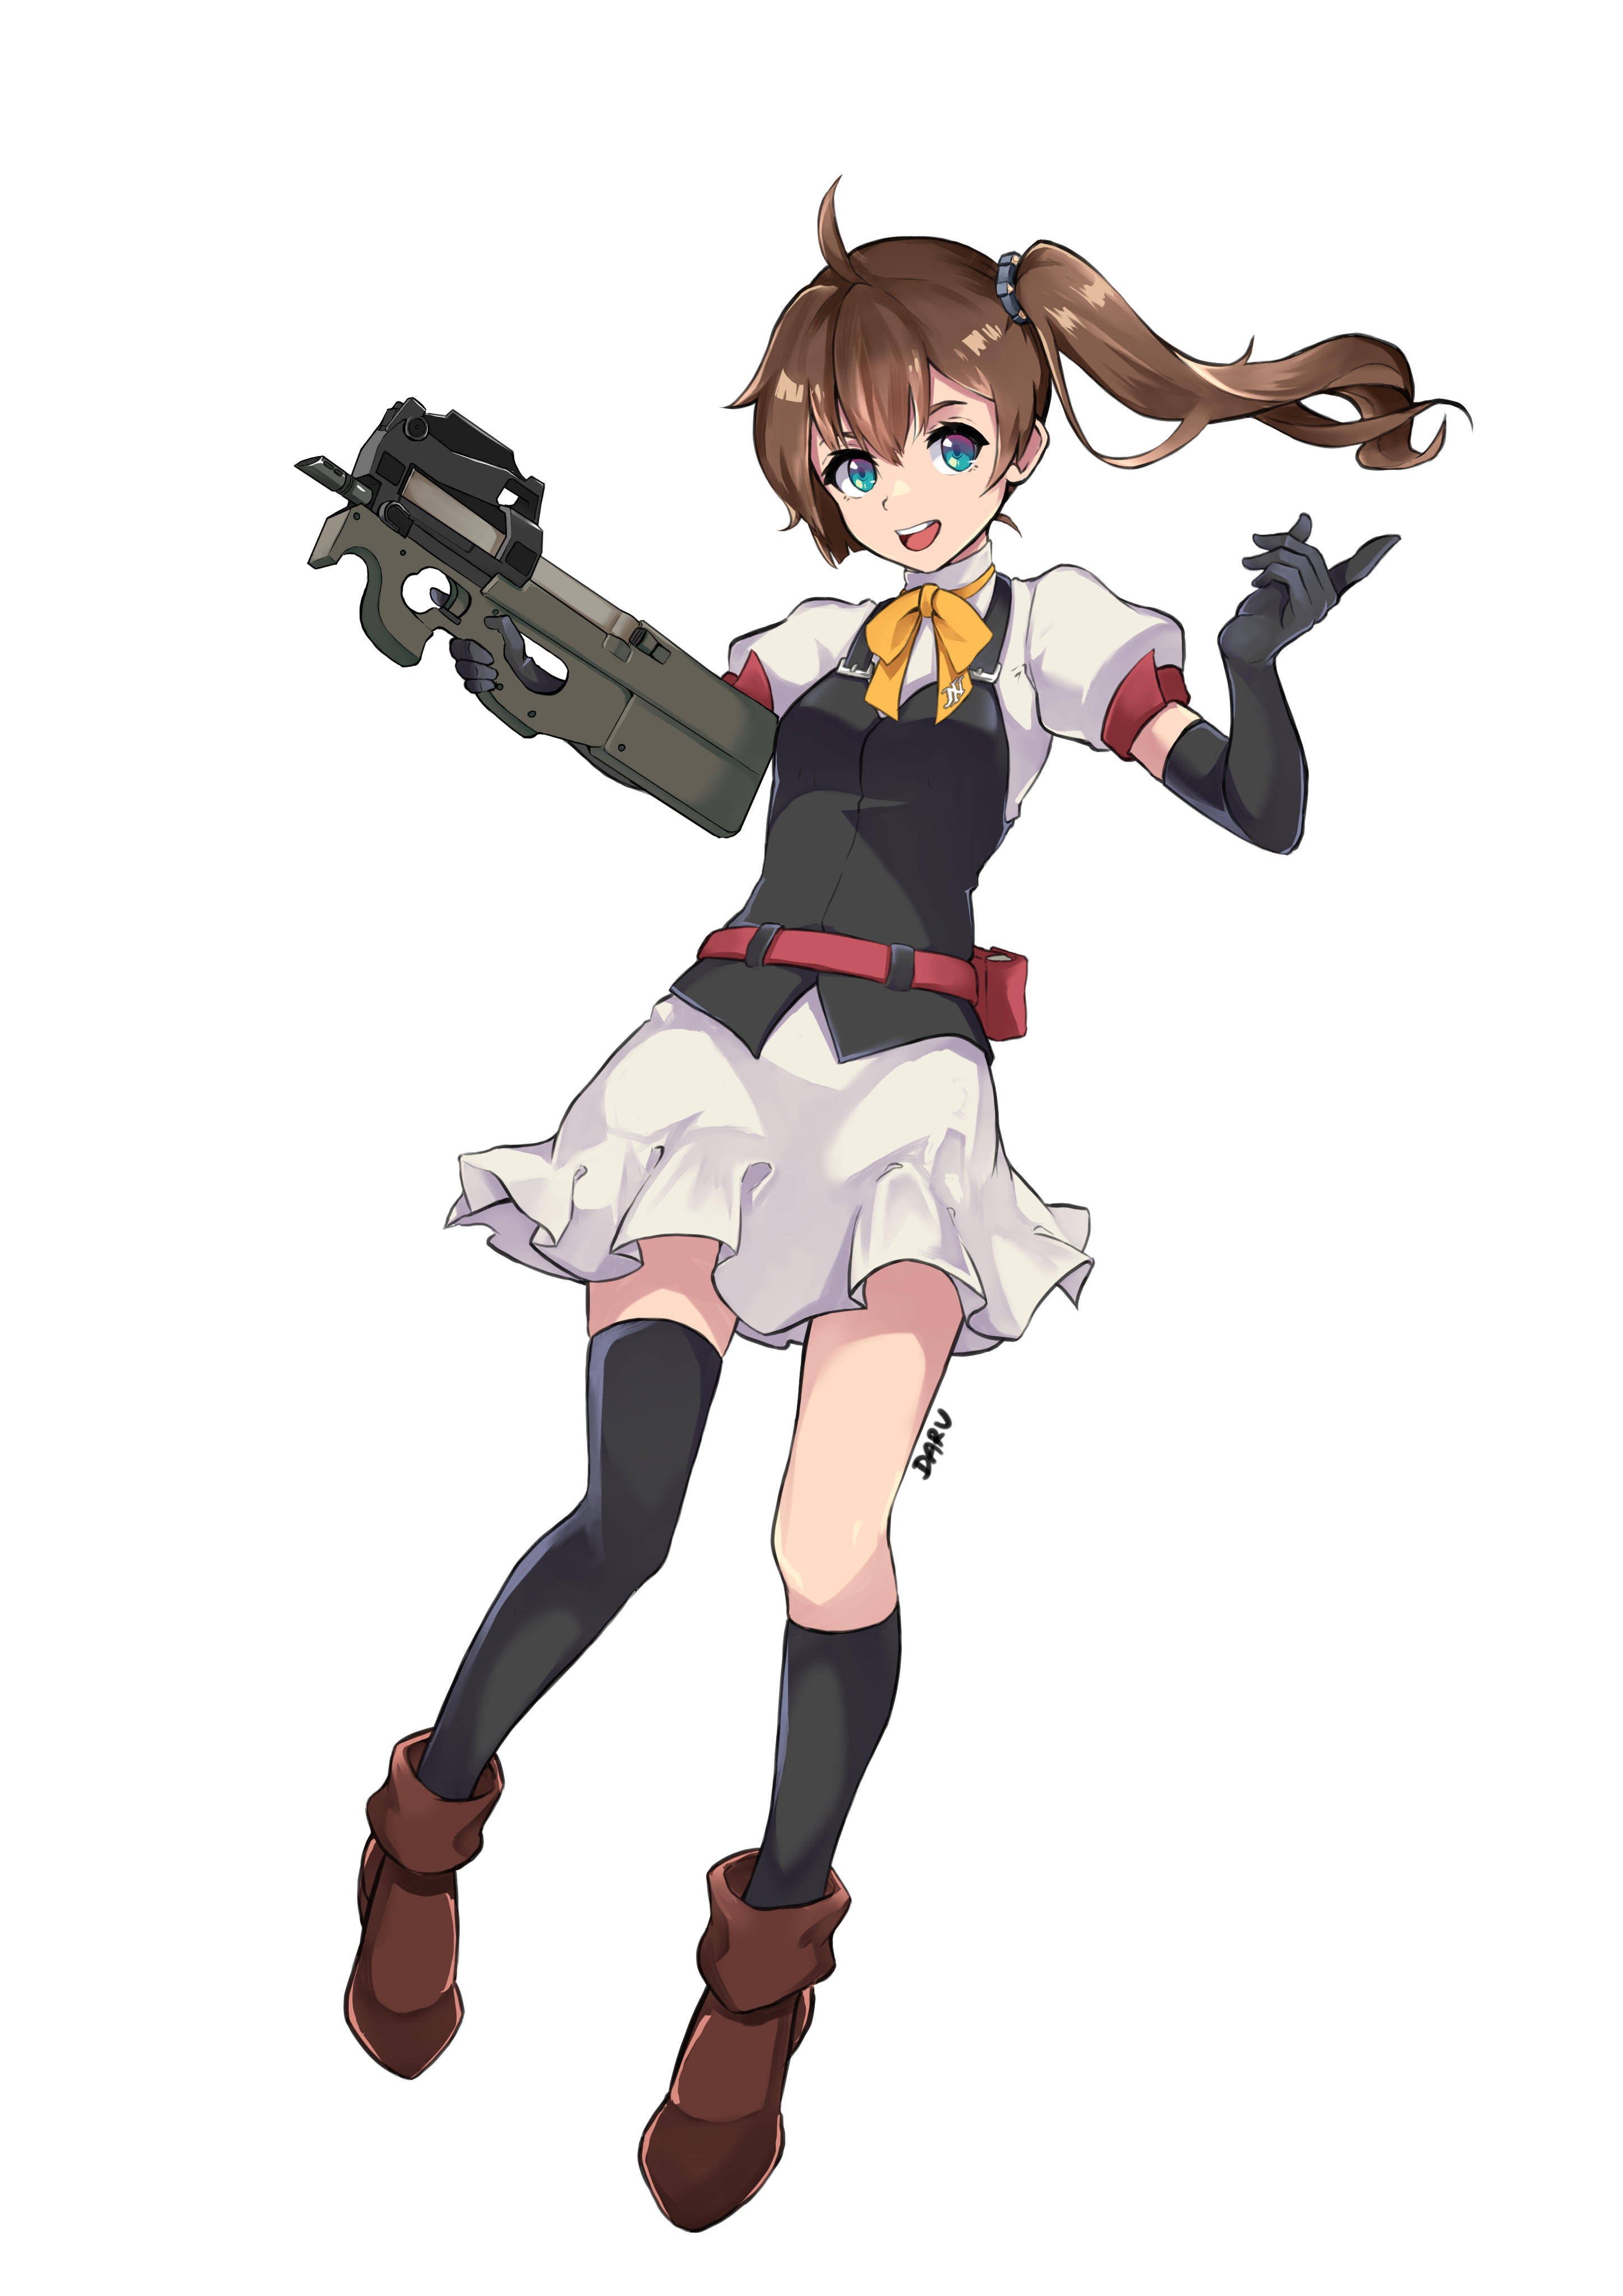 Anime 2894x4093 anime girls gun FN P90 weapon portrait display brunette blue eyes smiling submachine gun anime girls with guns